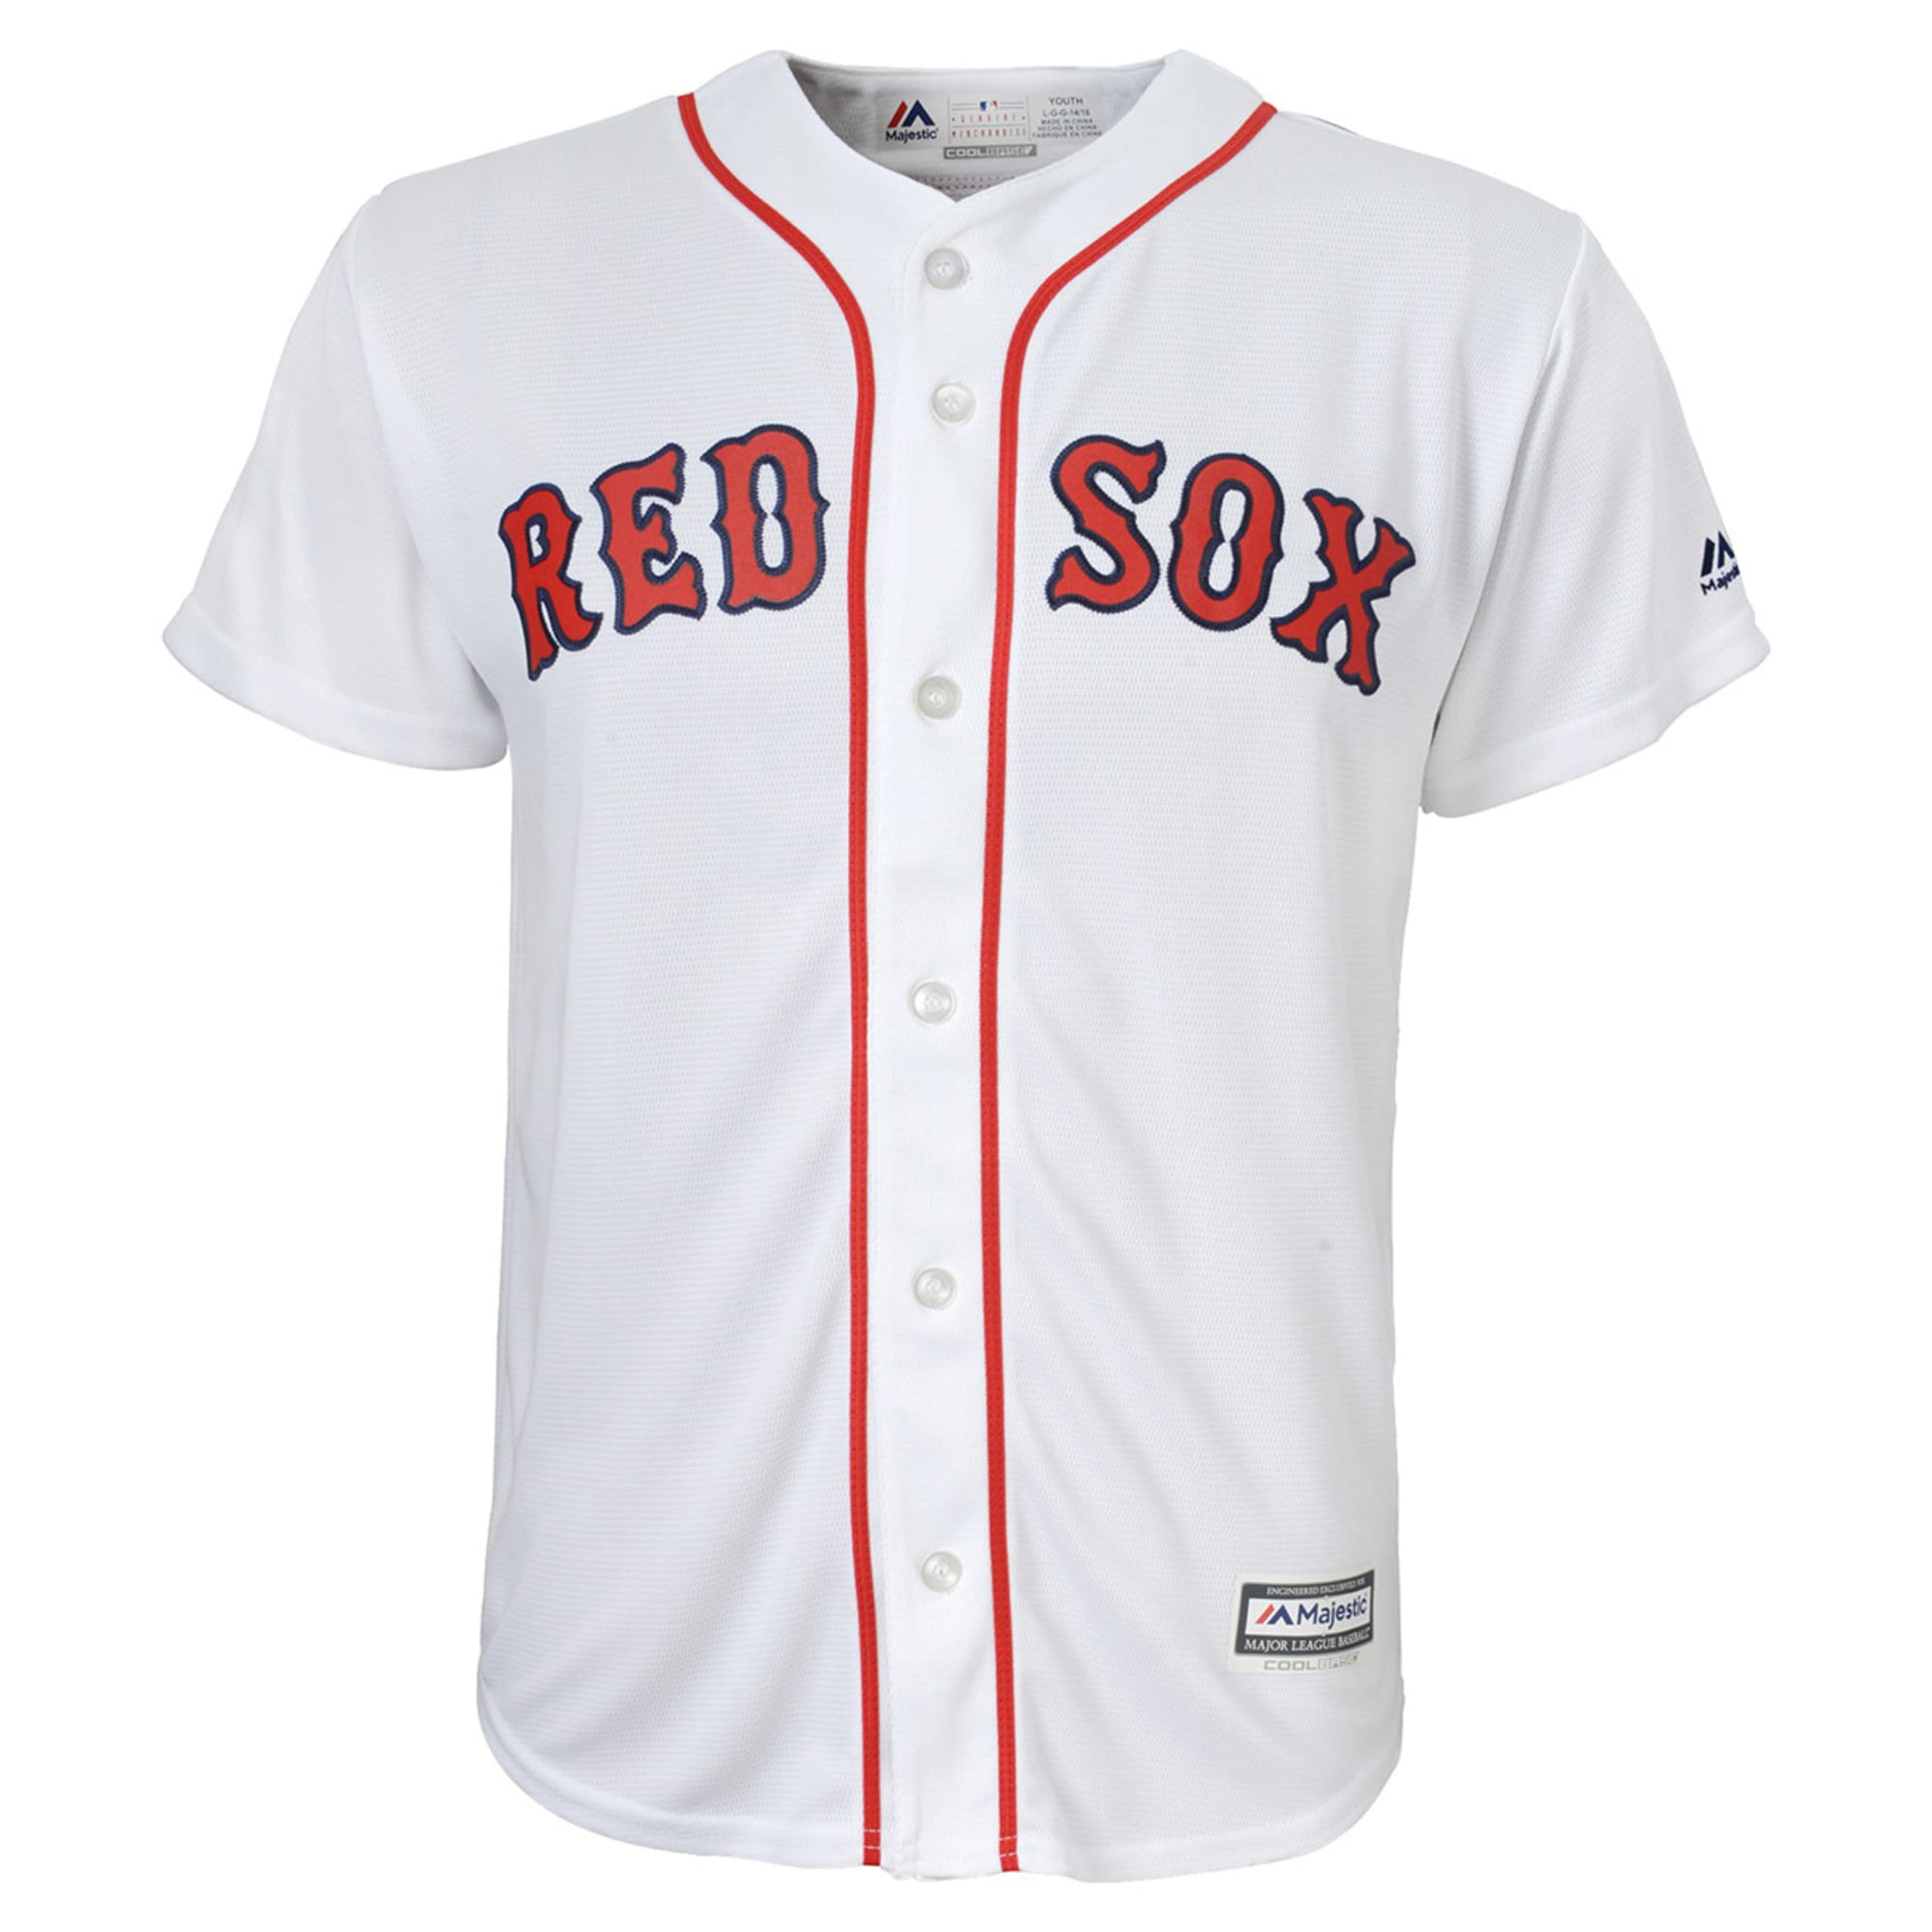 BOSTON RED SOX MANNY RAMIREZ MAJESTIC AUTHENTIC MLB BASEBALL JERSEY ADULT  XL NWT